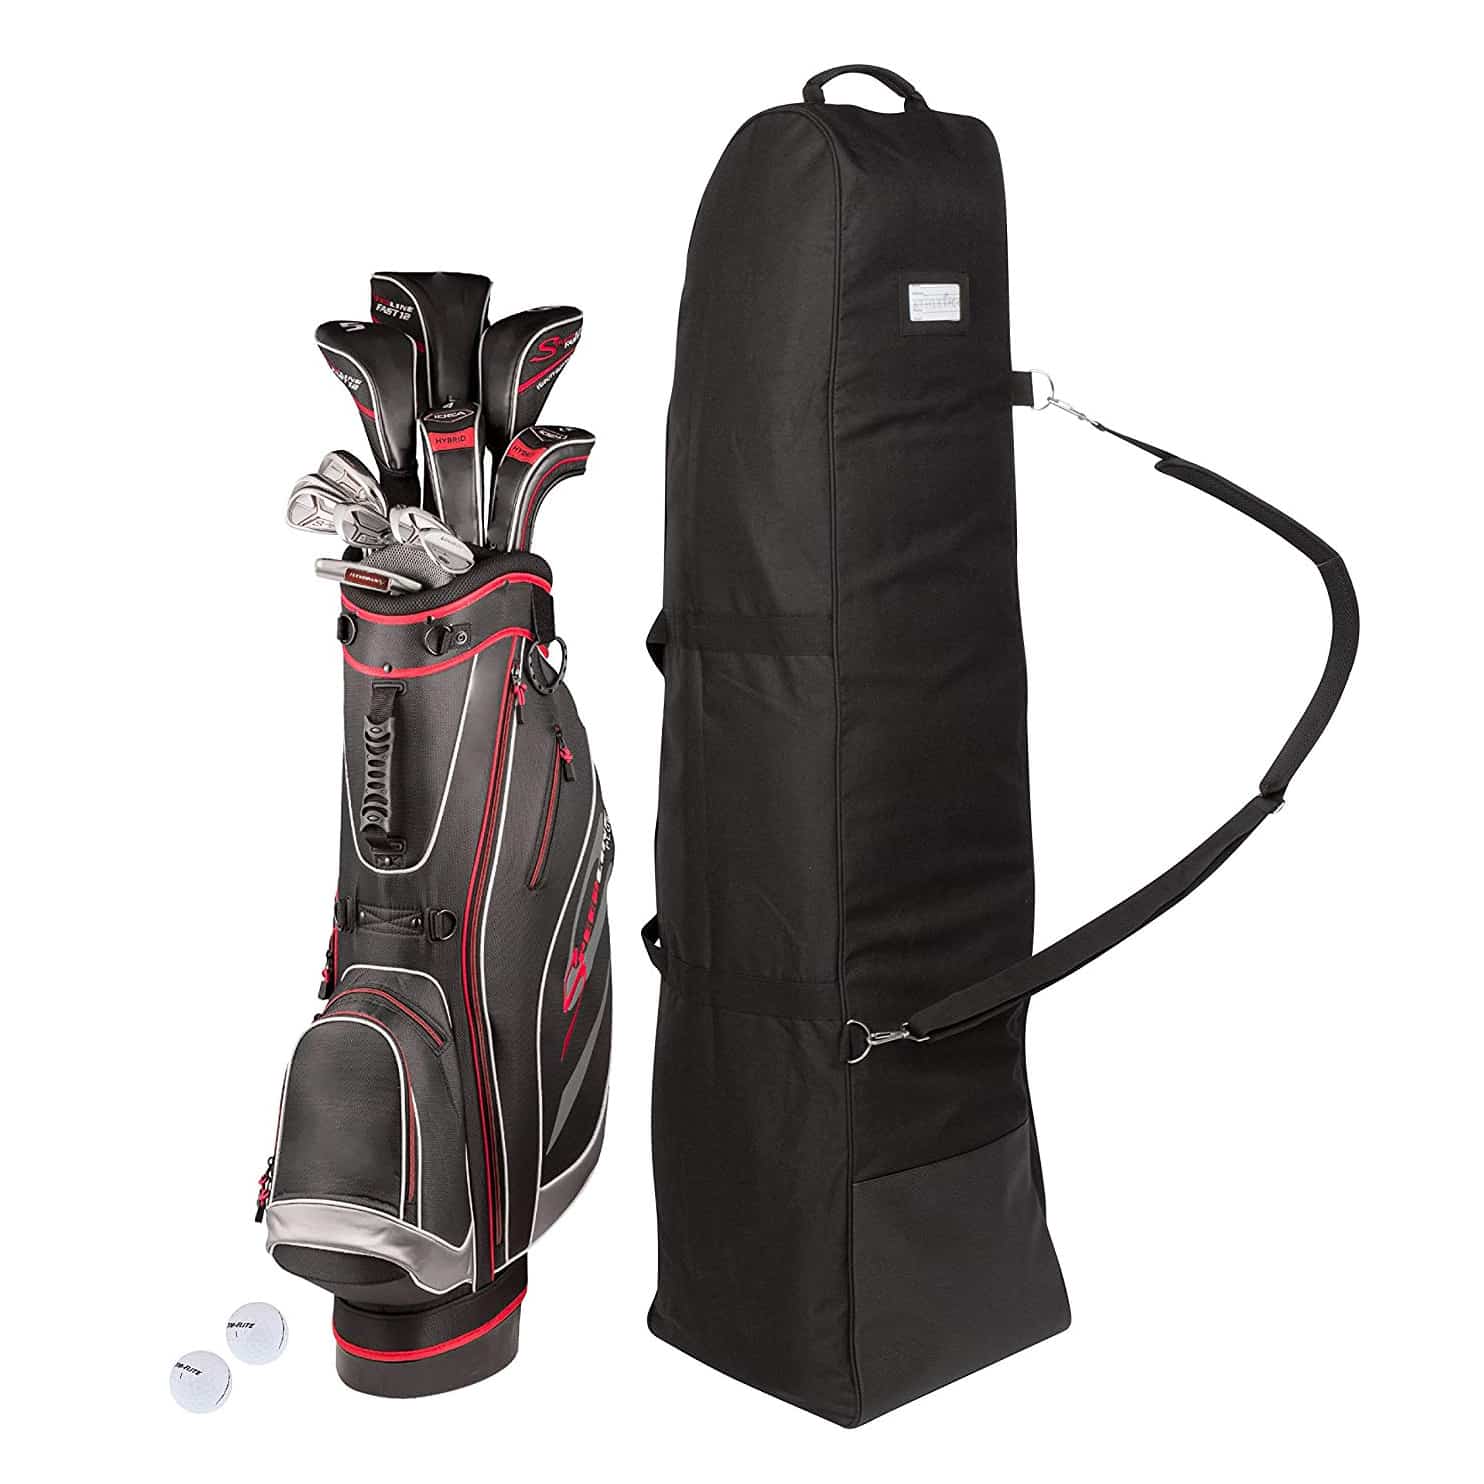 travel golf bag dimensions